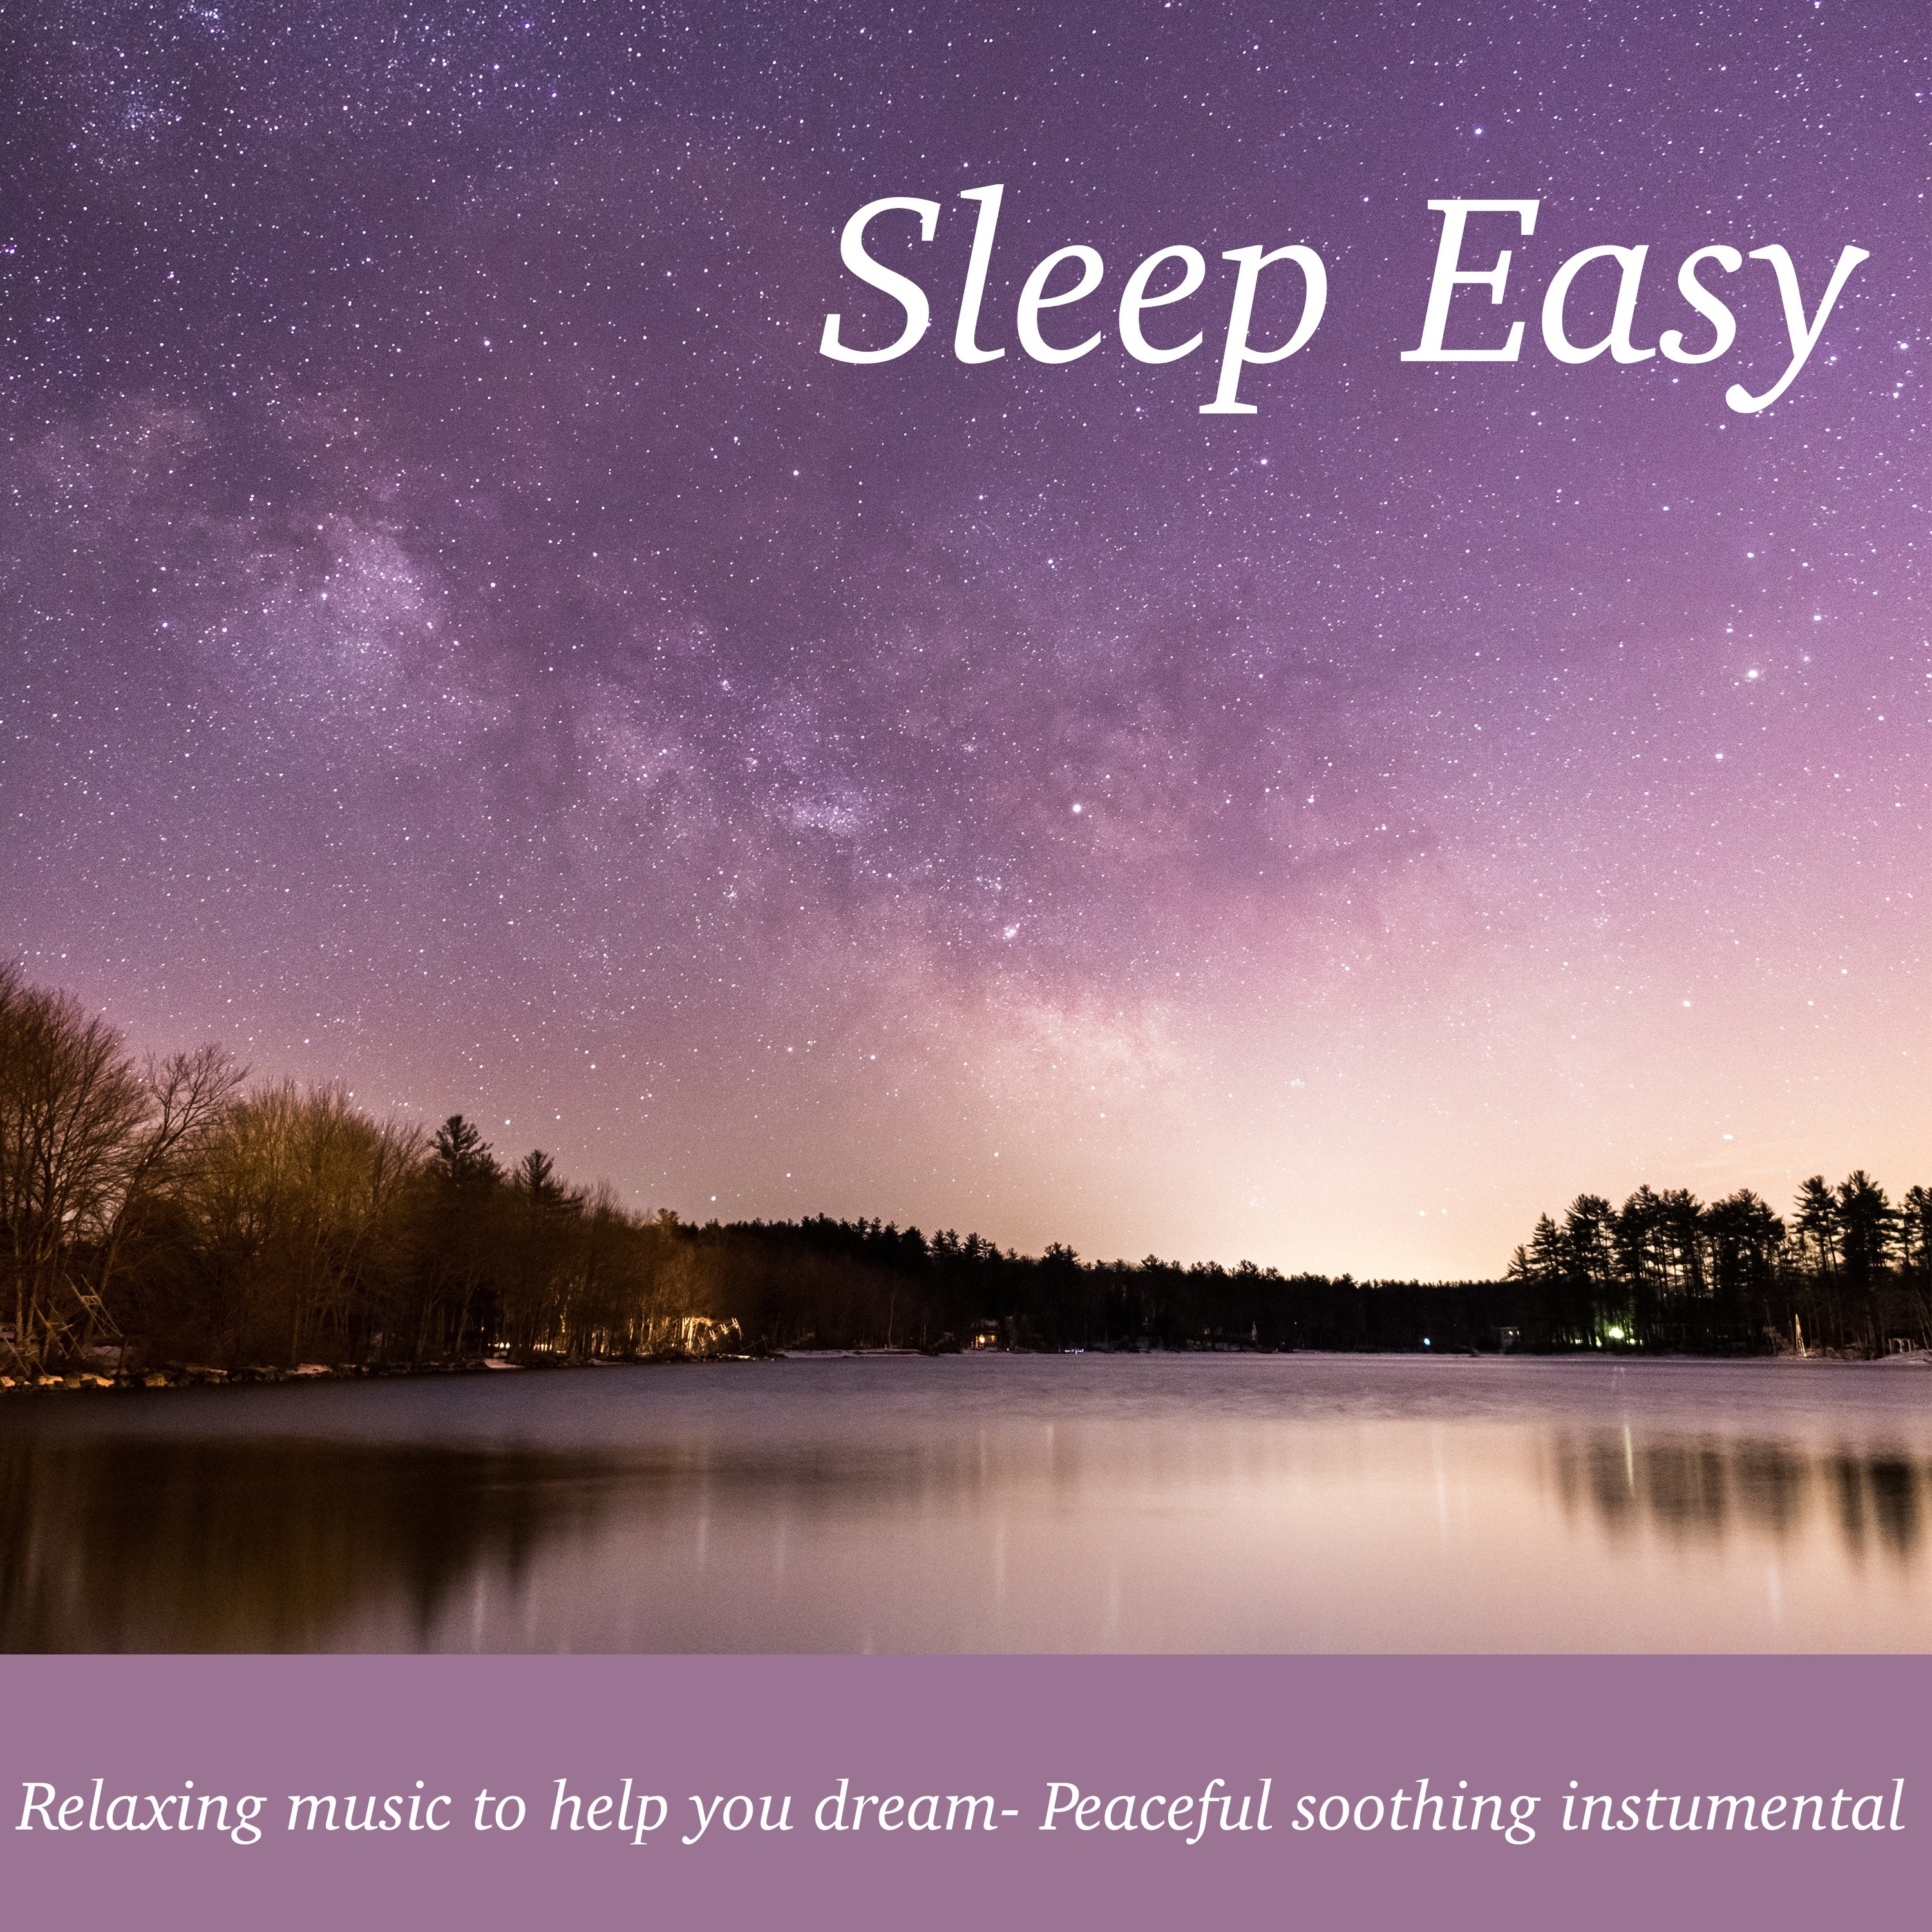 Background Music to Make You Sleep